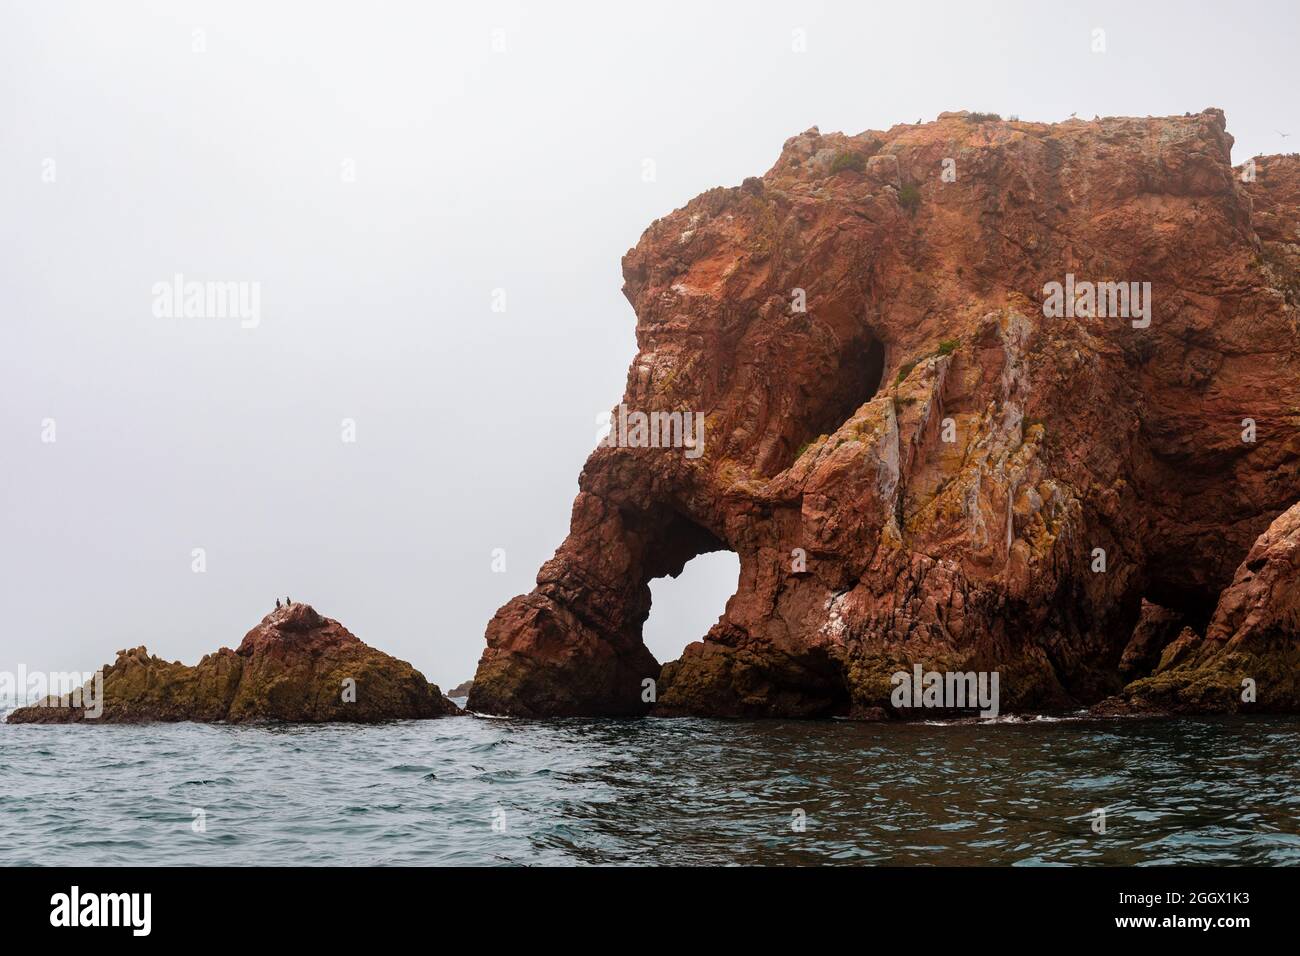 Elephant Head Felsformation, auf der Berlenga Grande Insel, Berlengas Archipel, Portugal. Stockfoto